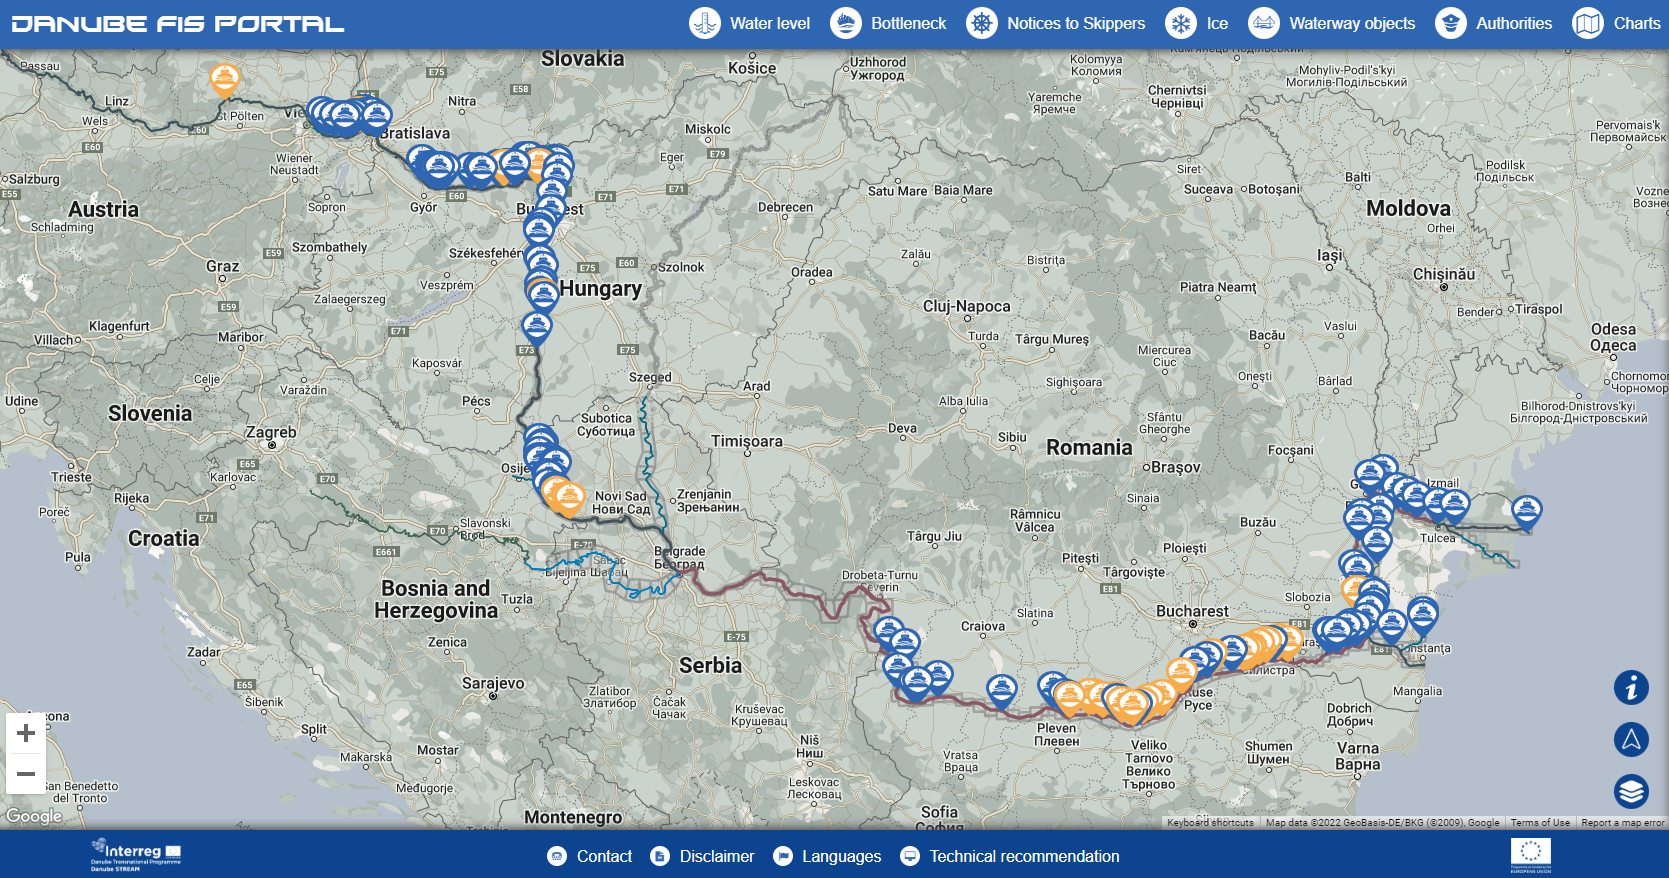 Danube FIS Portal